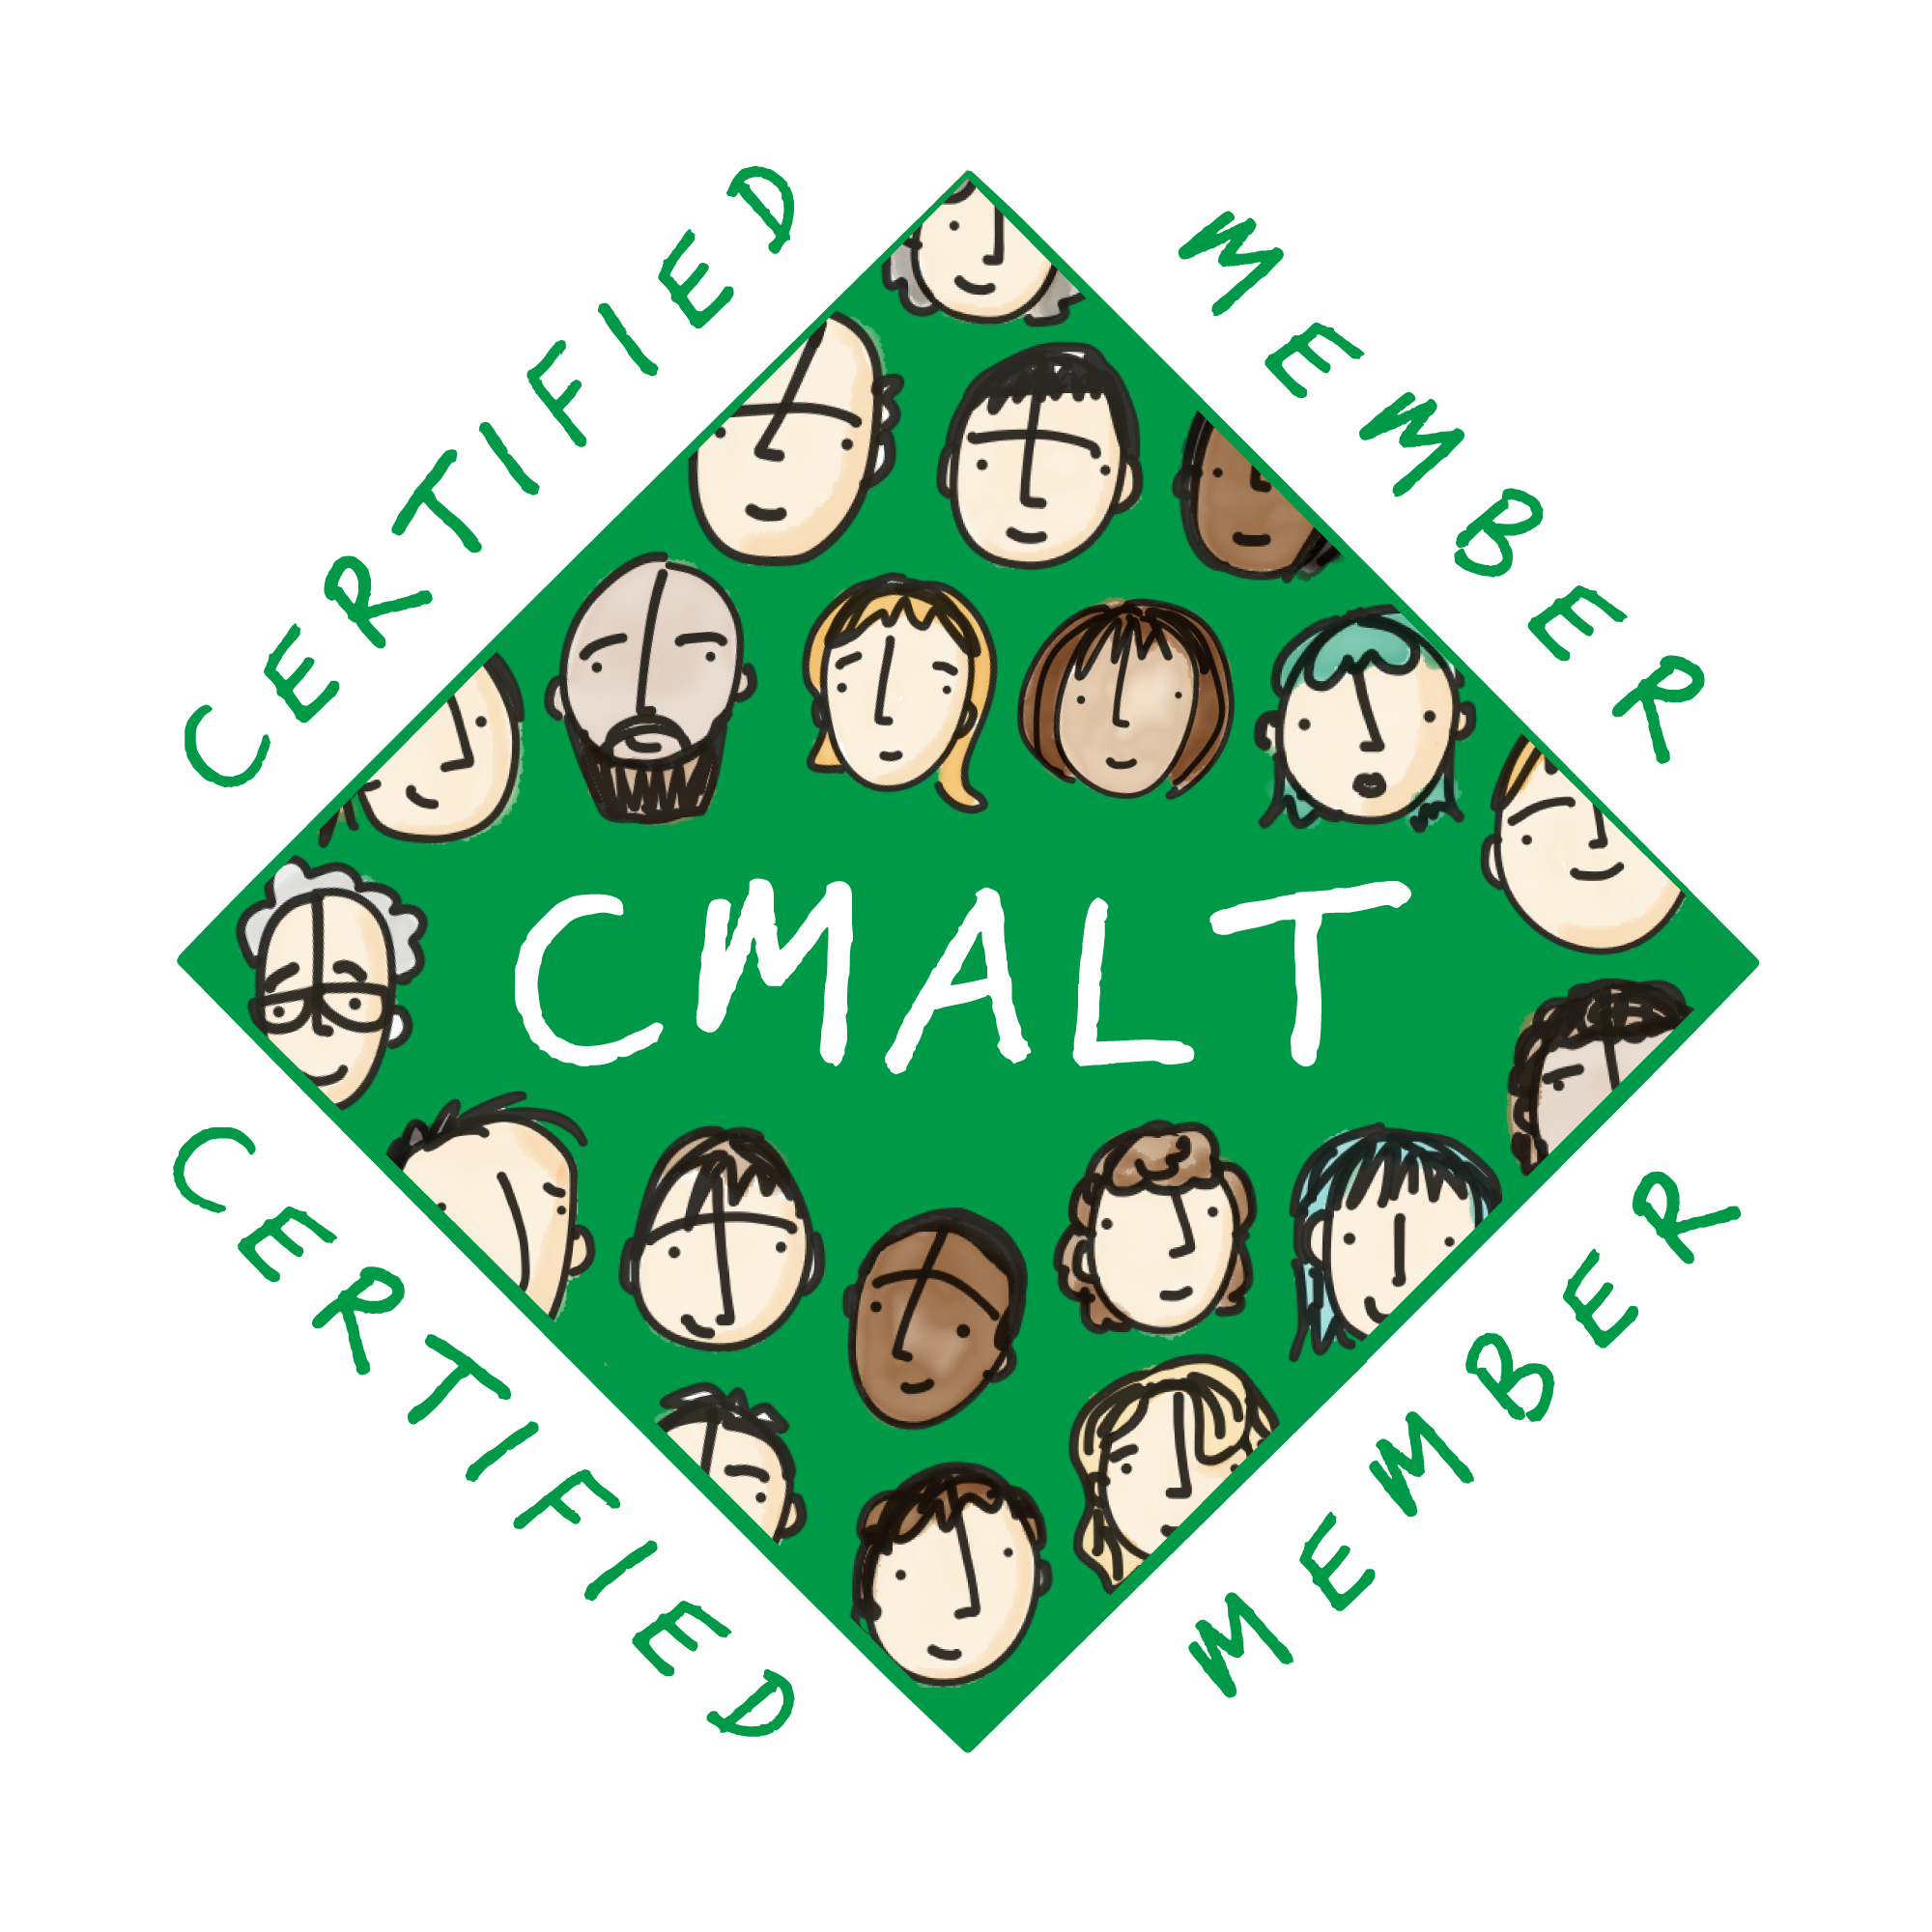 Certified Membership (CMALT)